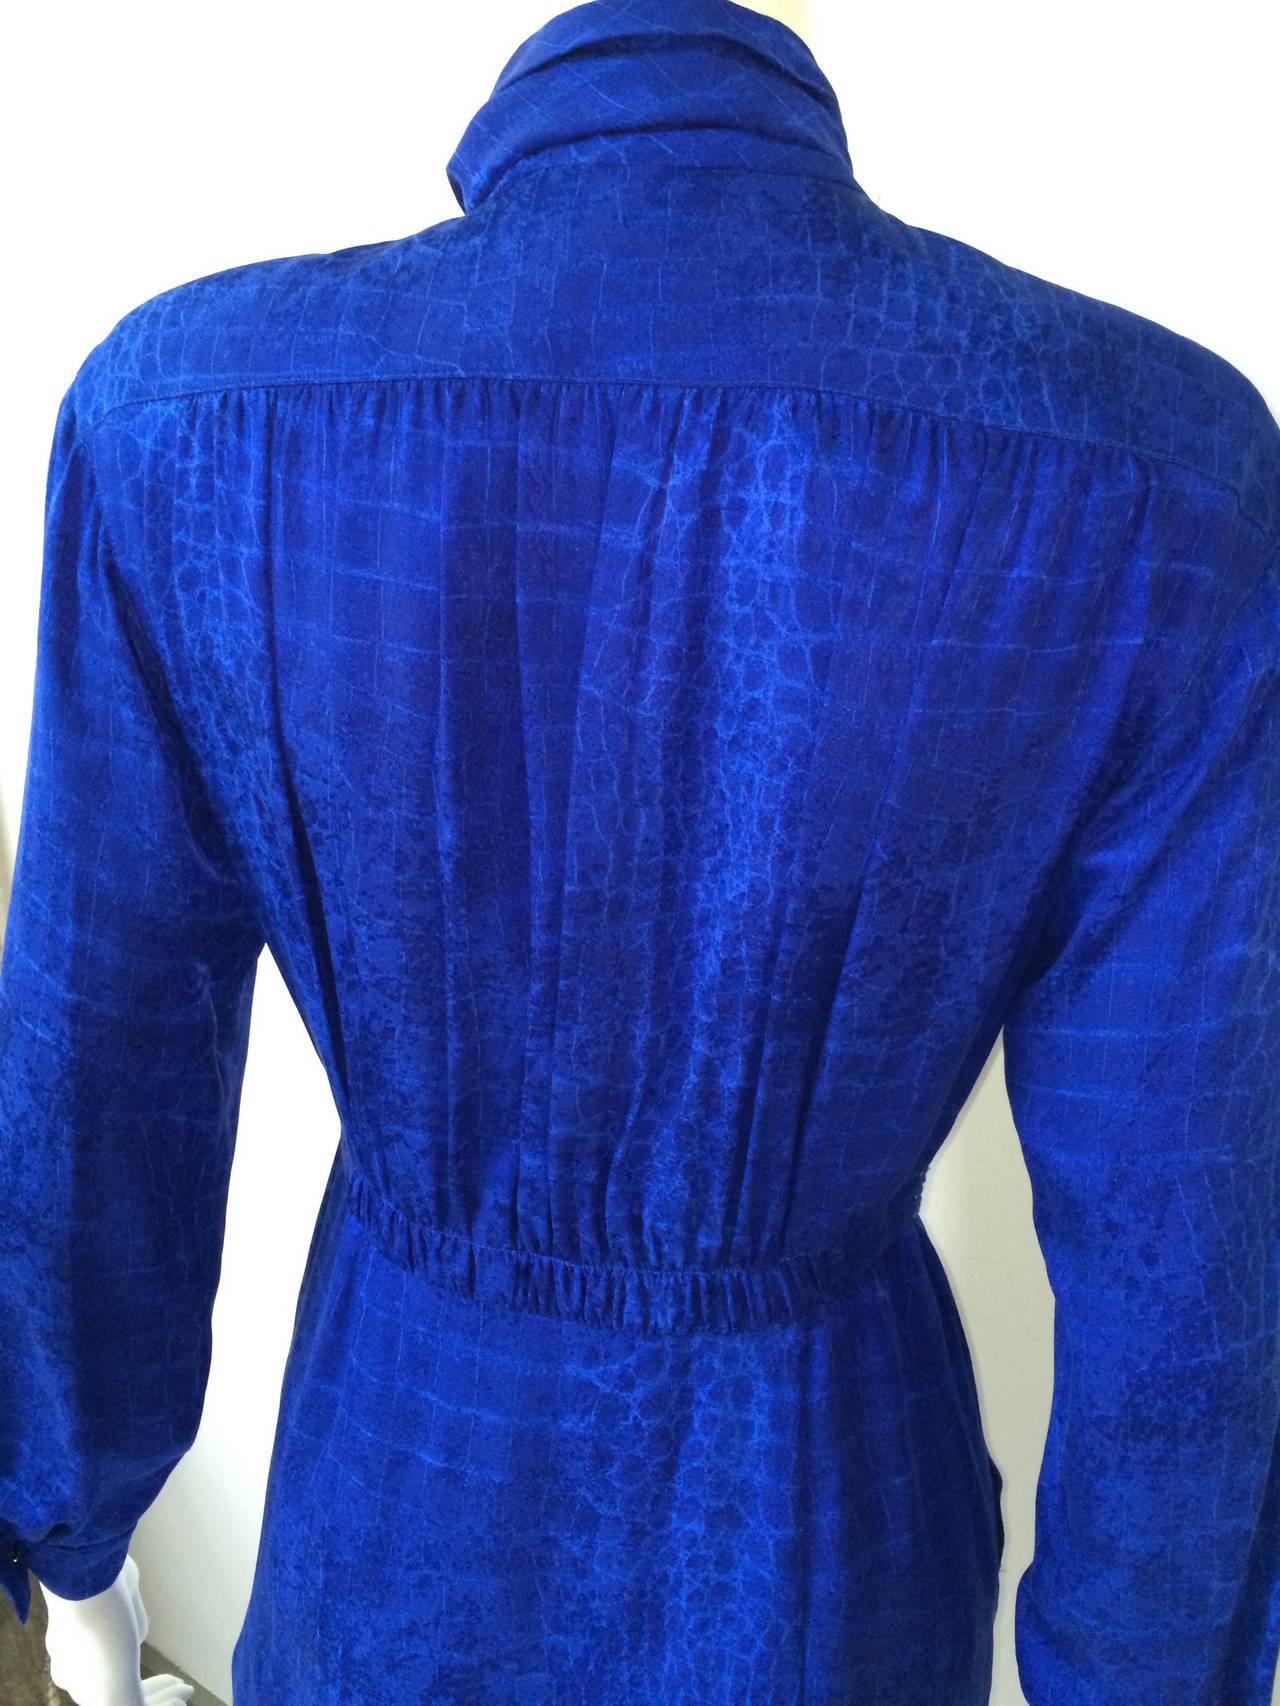 Ungaro Parallele Paris 80s silk dress size 6. 1